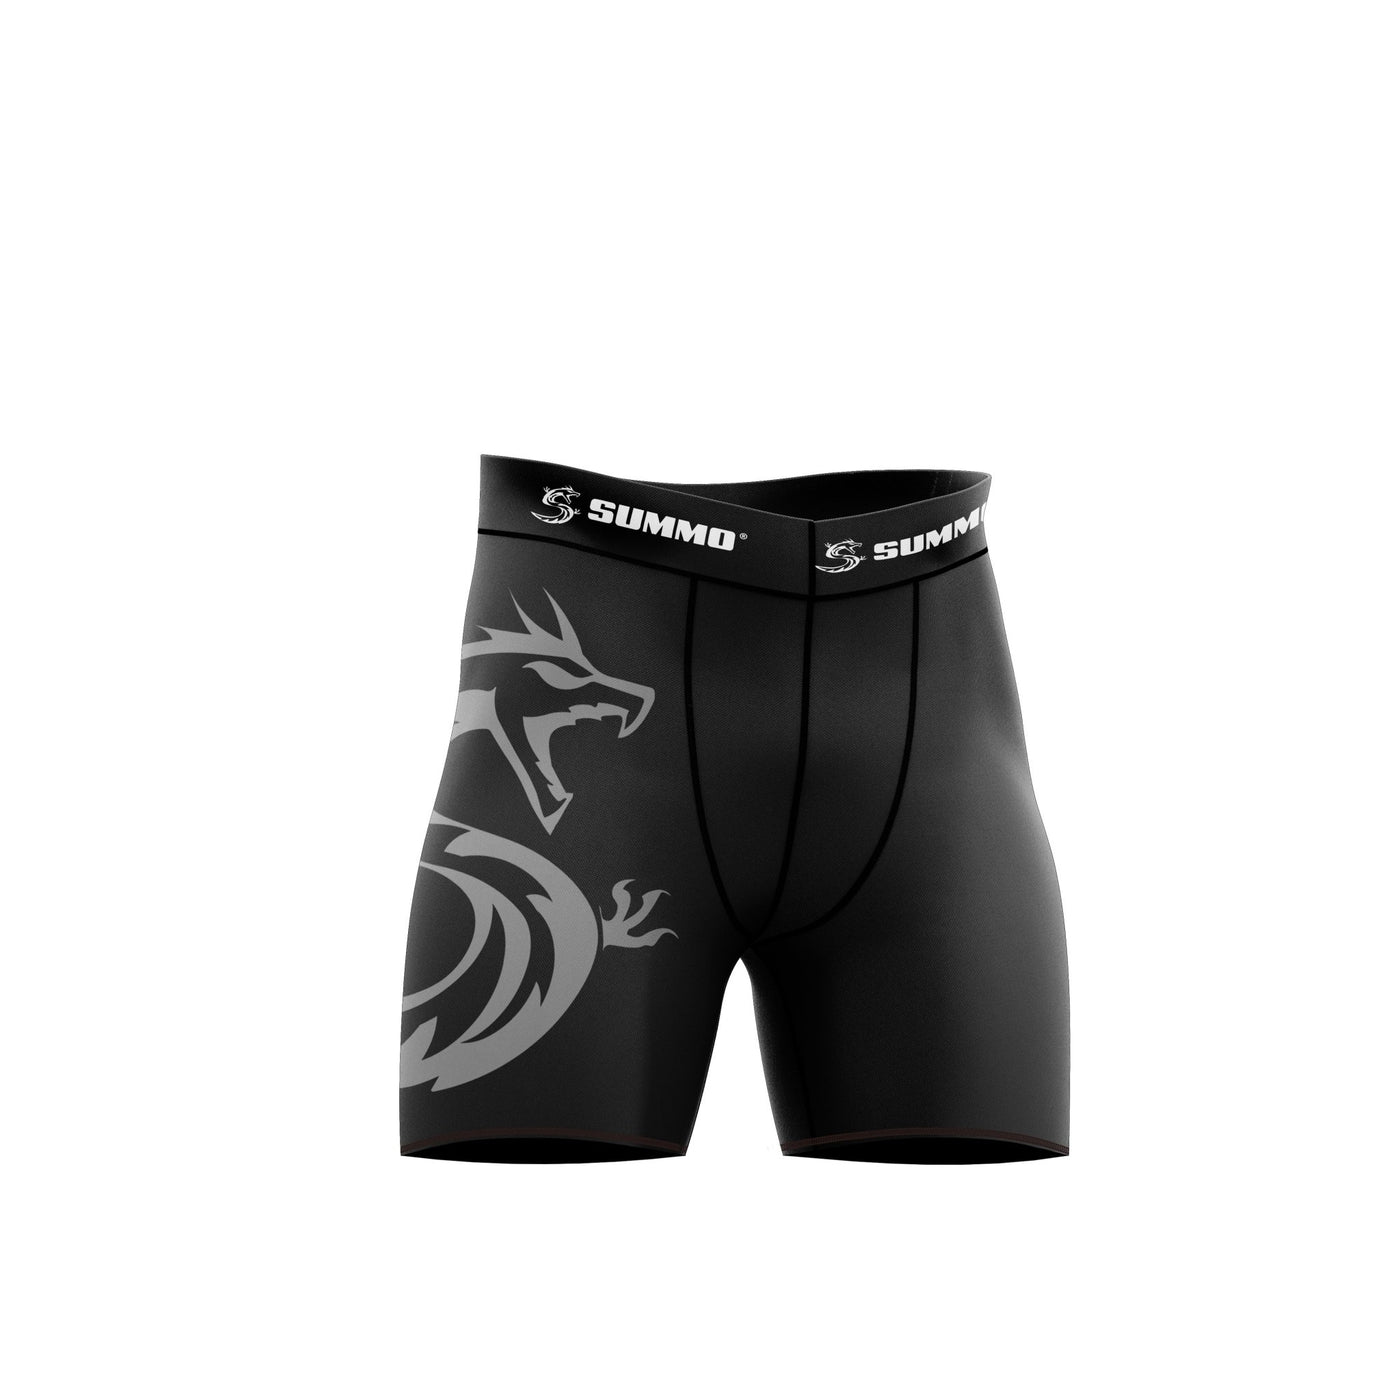 Summo Baisc Black Compression Shorts for Men/Women - Summo Sports